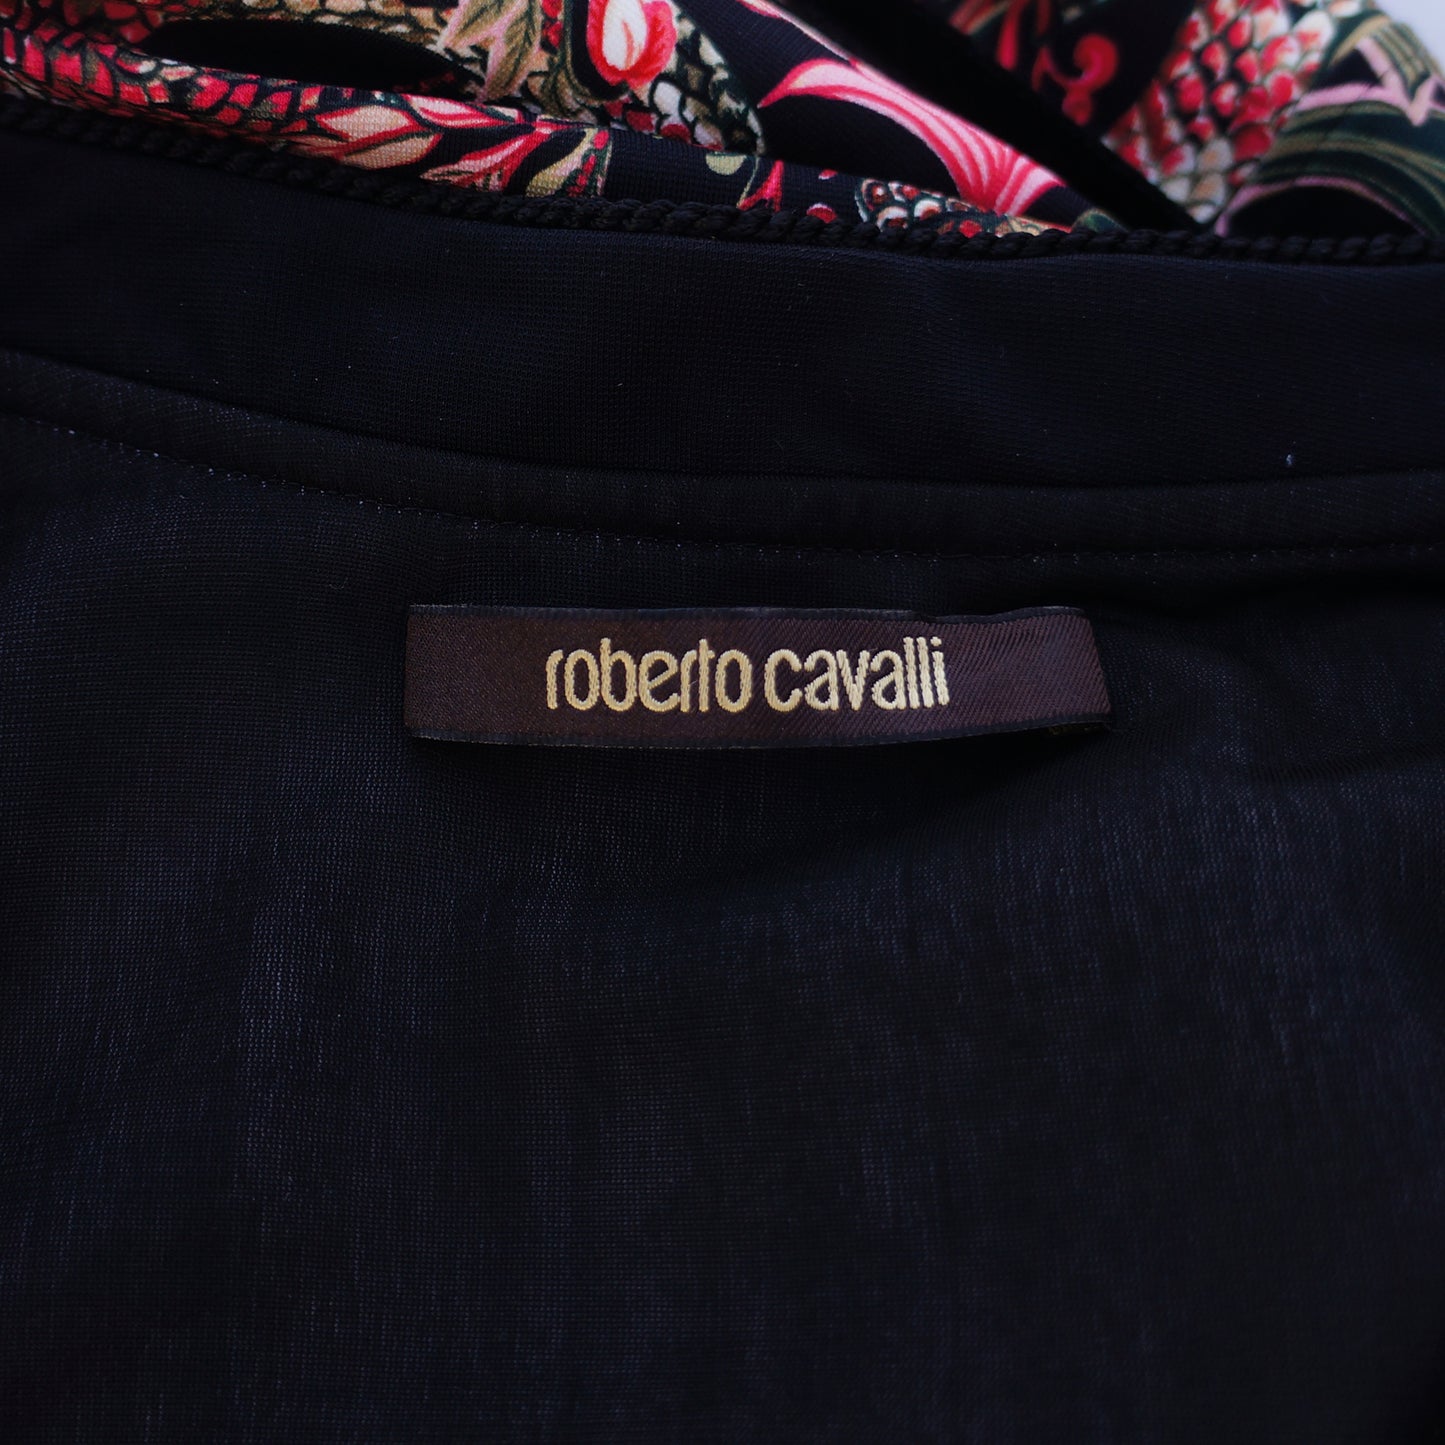 ROBERTO CAVALLI FLORAL LEOPARD SNAKE DRESS - leefluxury.com